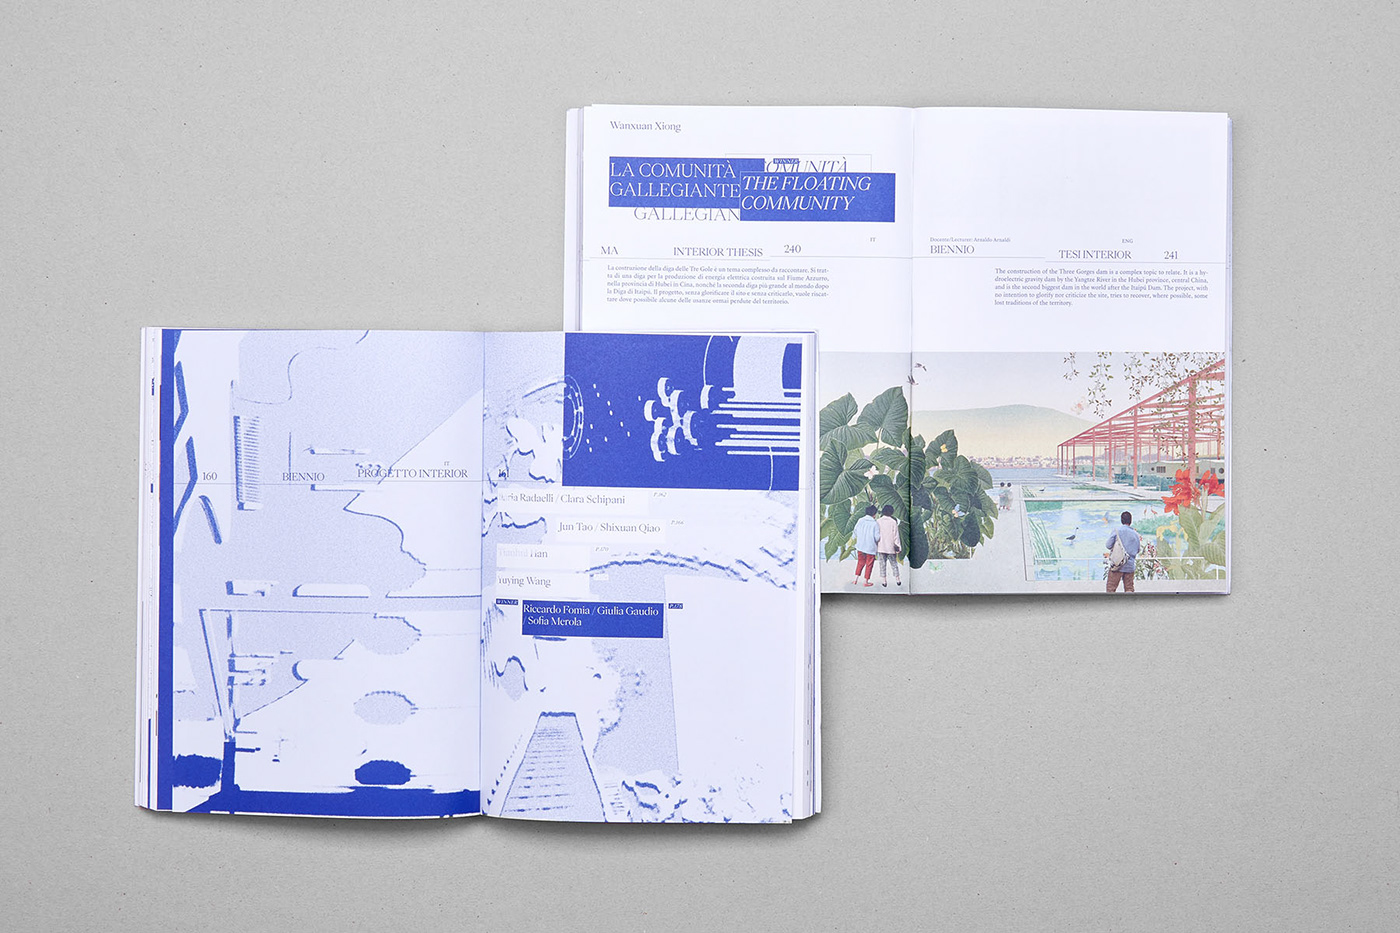 2022 design award blue book catalog design naba pantone print typography  